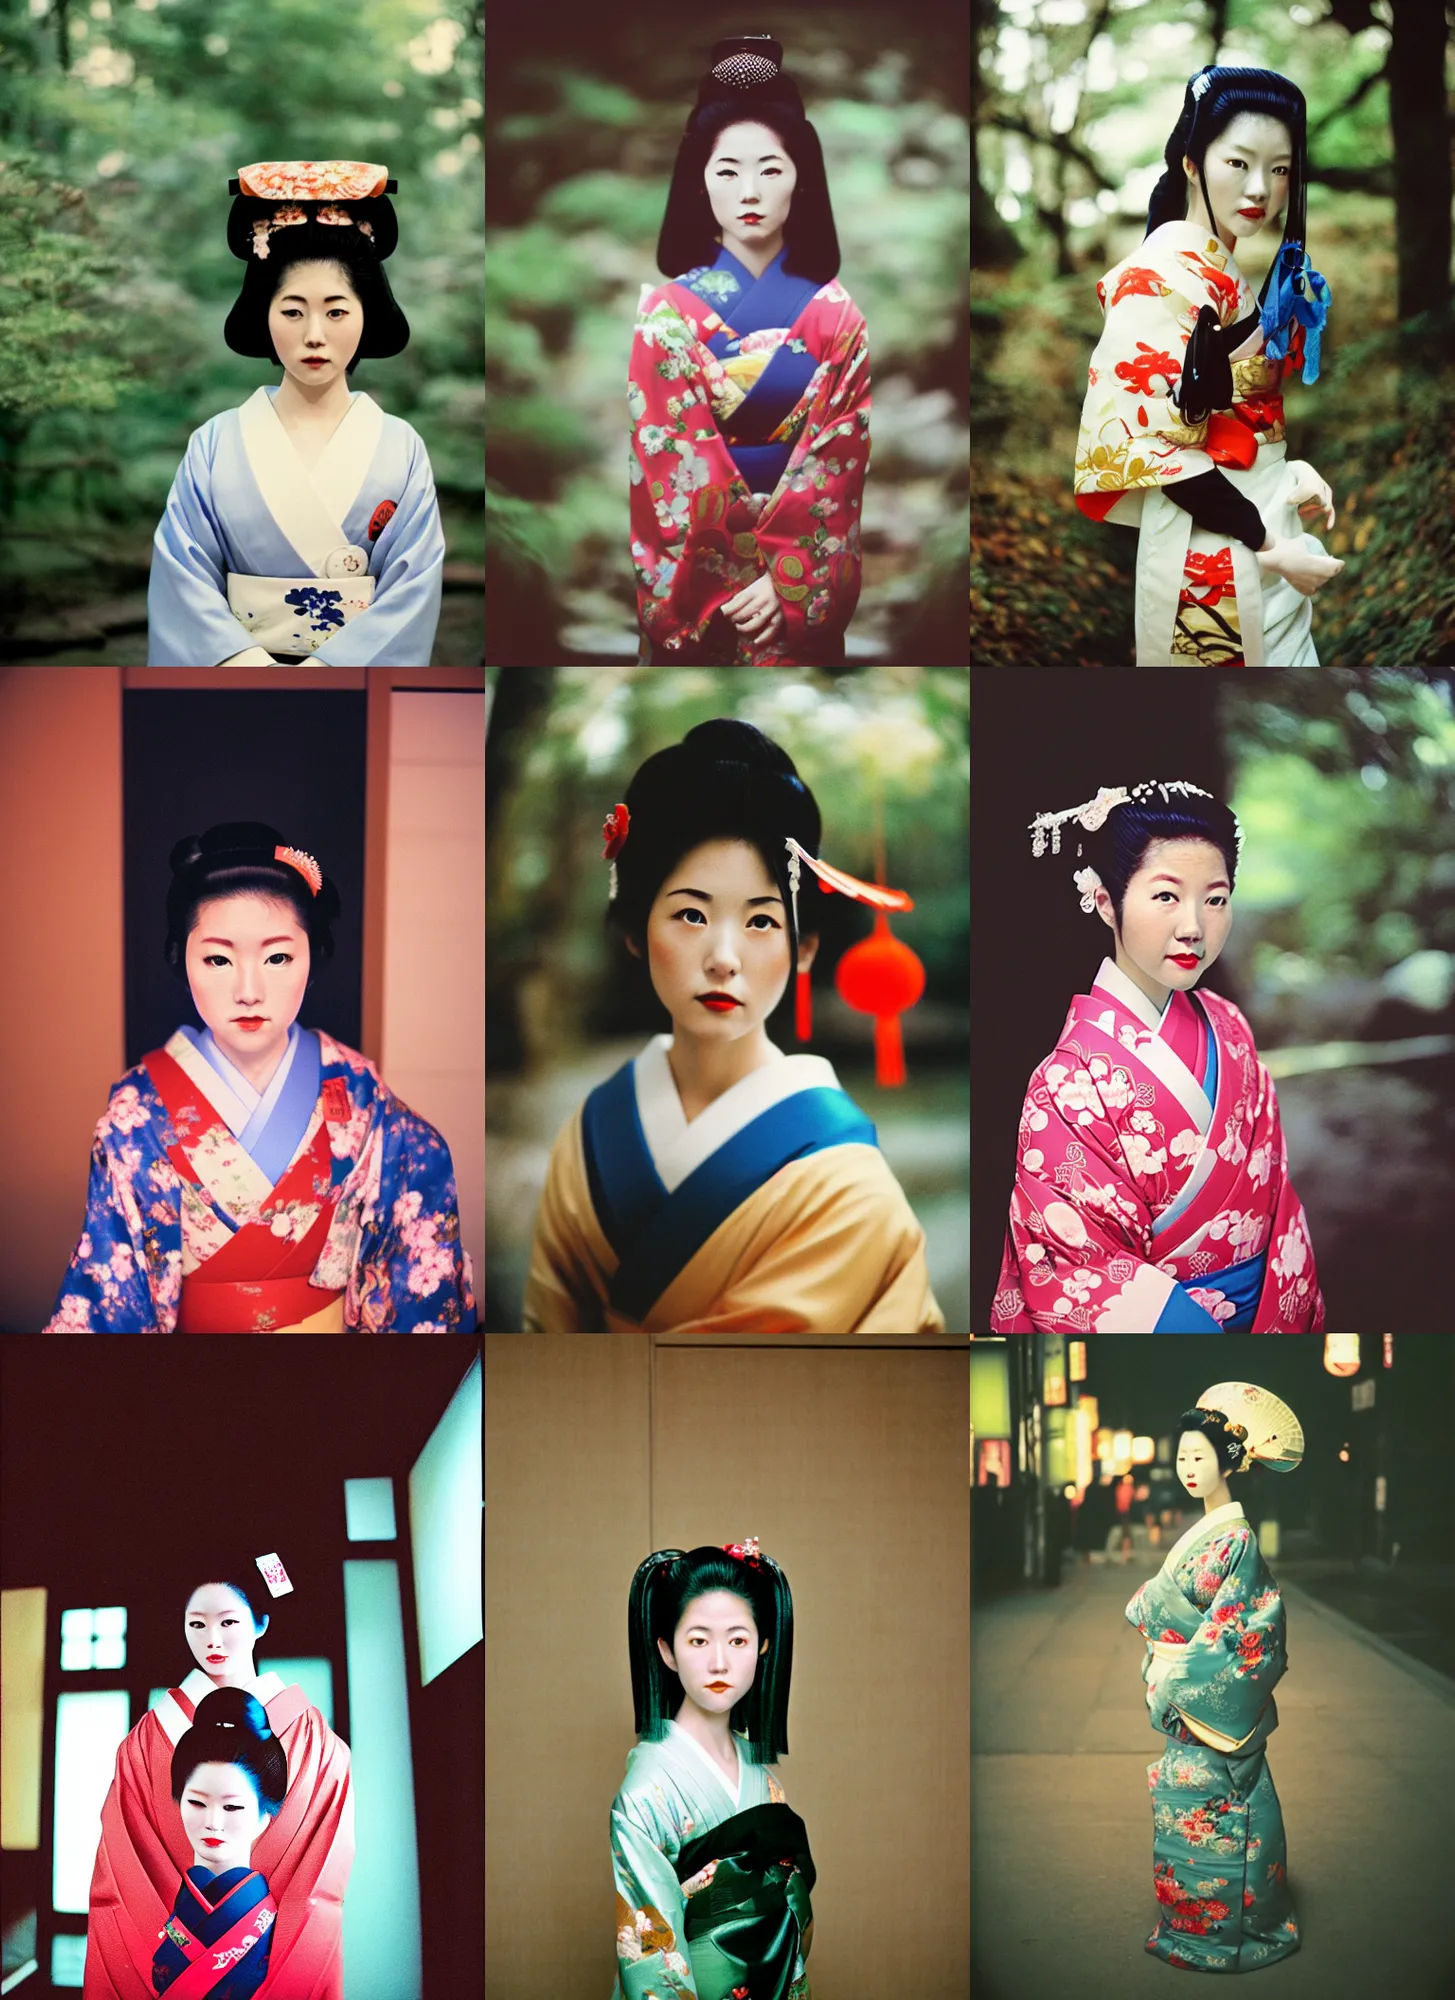 Prompt: Portrait Photograph of a Japanese Geisha CineStill X-Pro 800 Tungsten